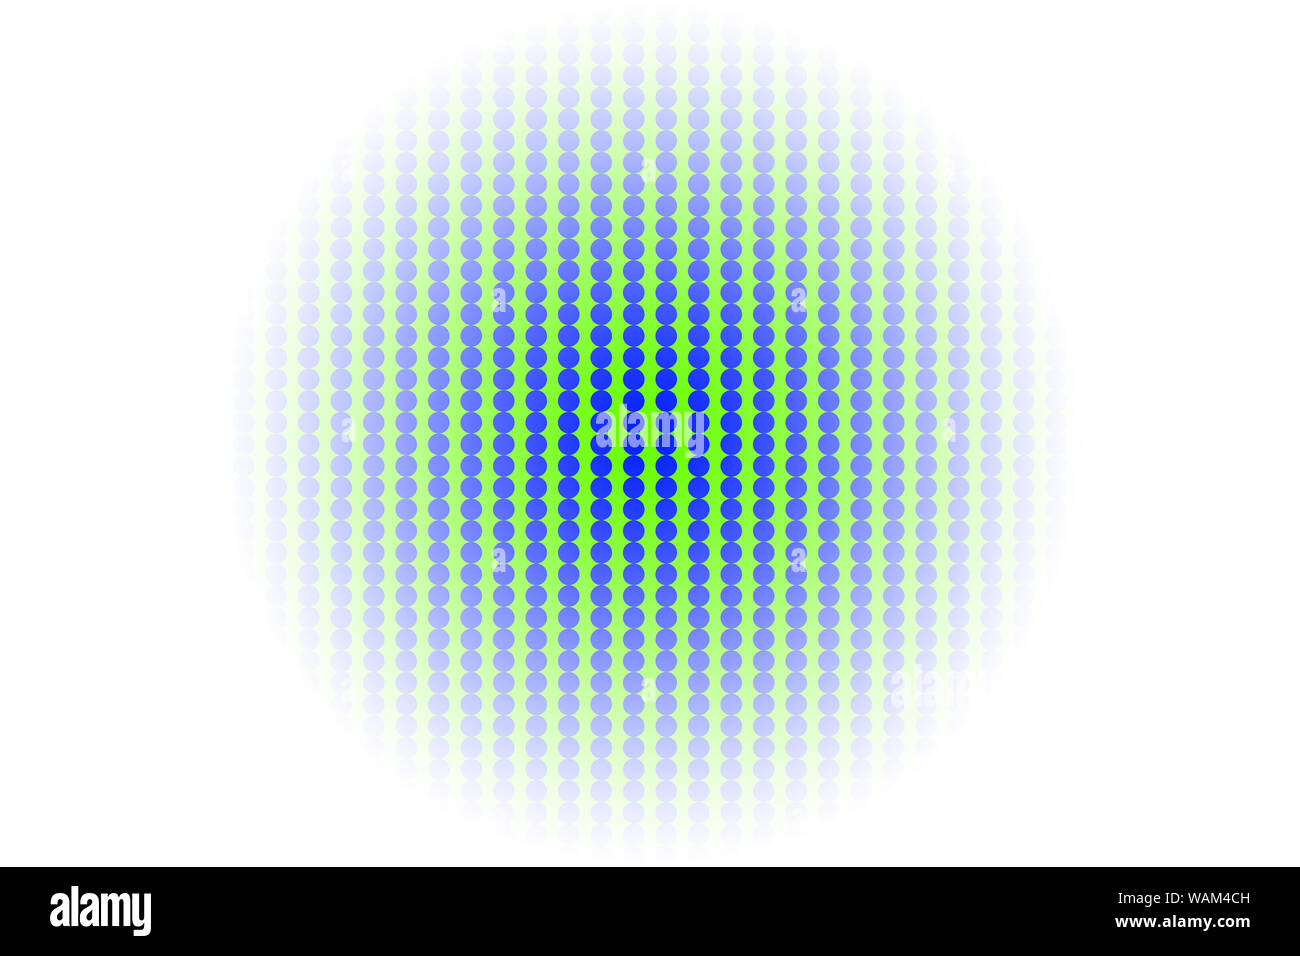 Illusion farbenfrohes Design 6000 x 4000 Pixel 16 Bit hochwertige Drucke fine art Home Decor Stockfoto